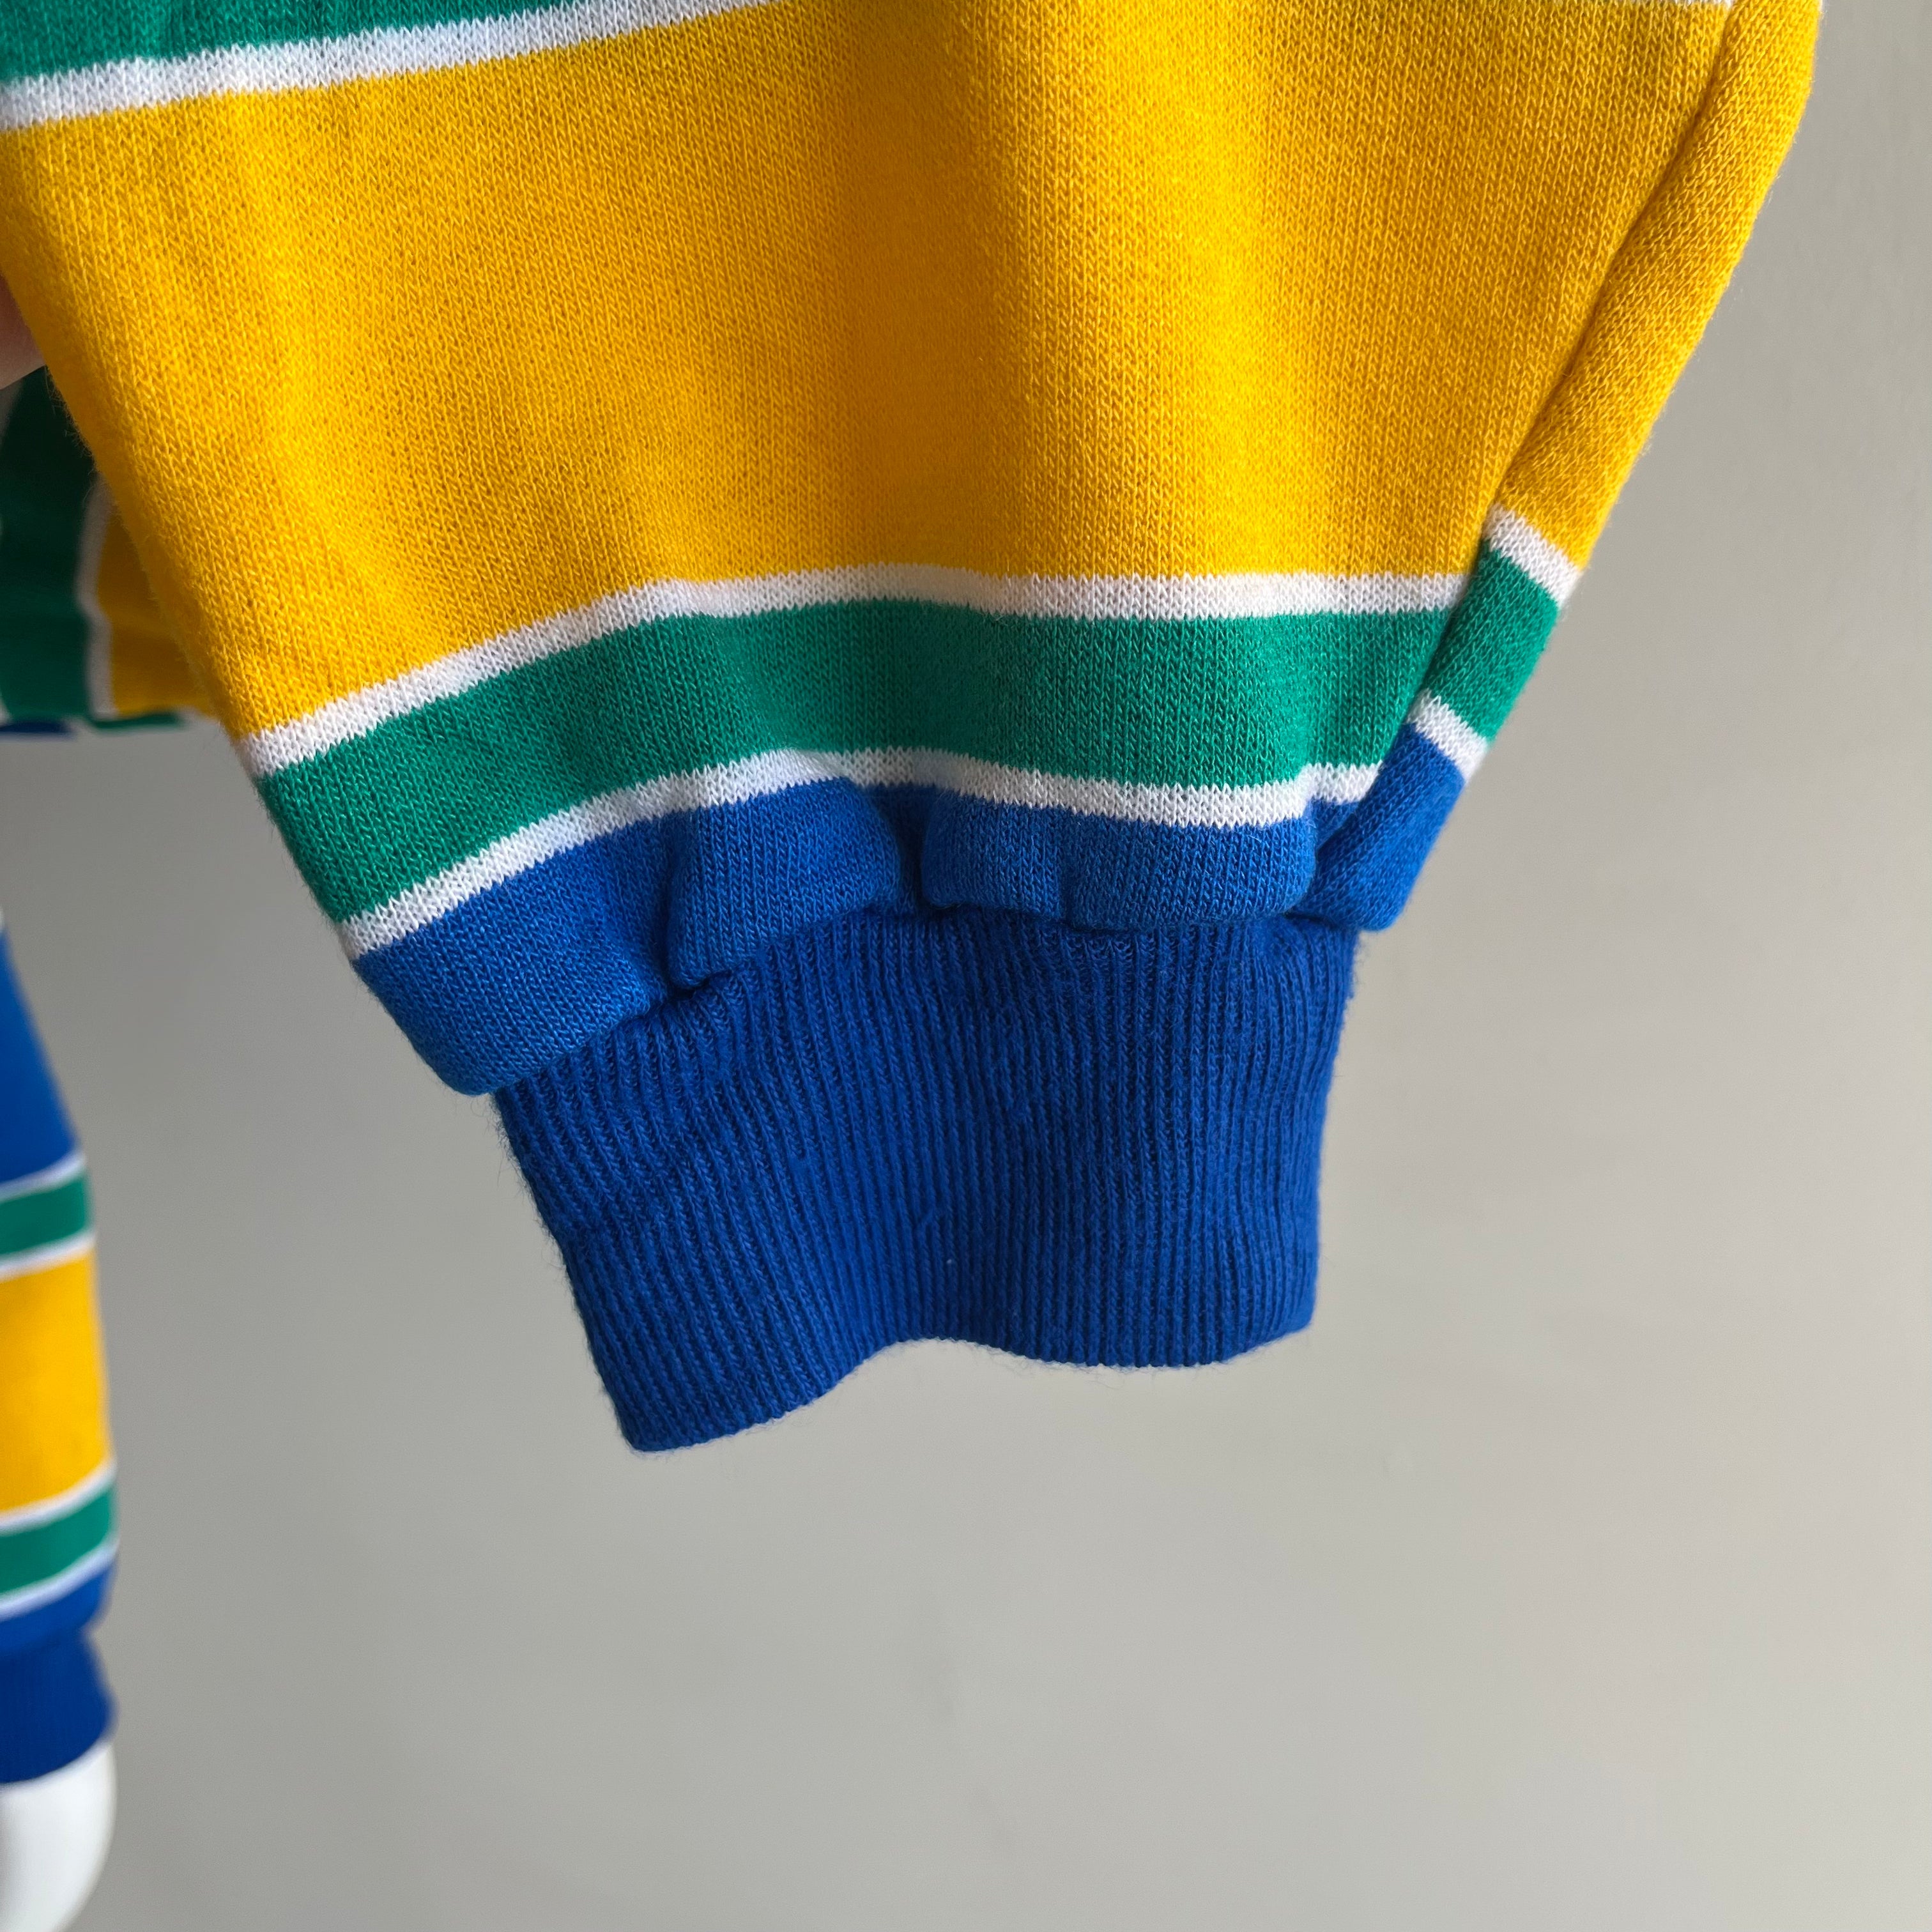 GG 1980s Boxy Lightweight Striped Collared Sweatshirt - THIS!